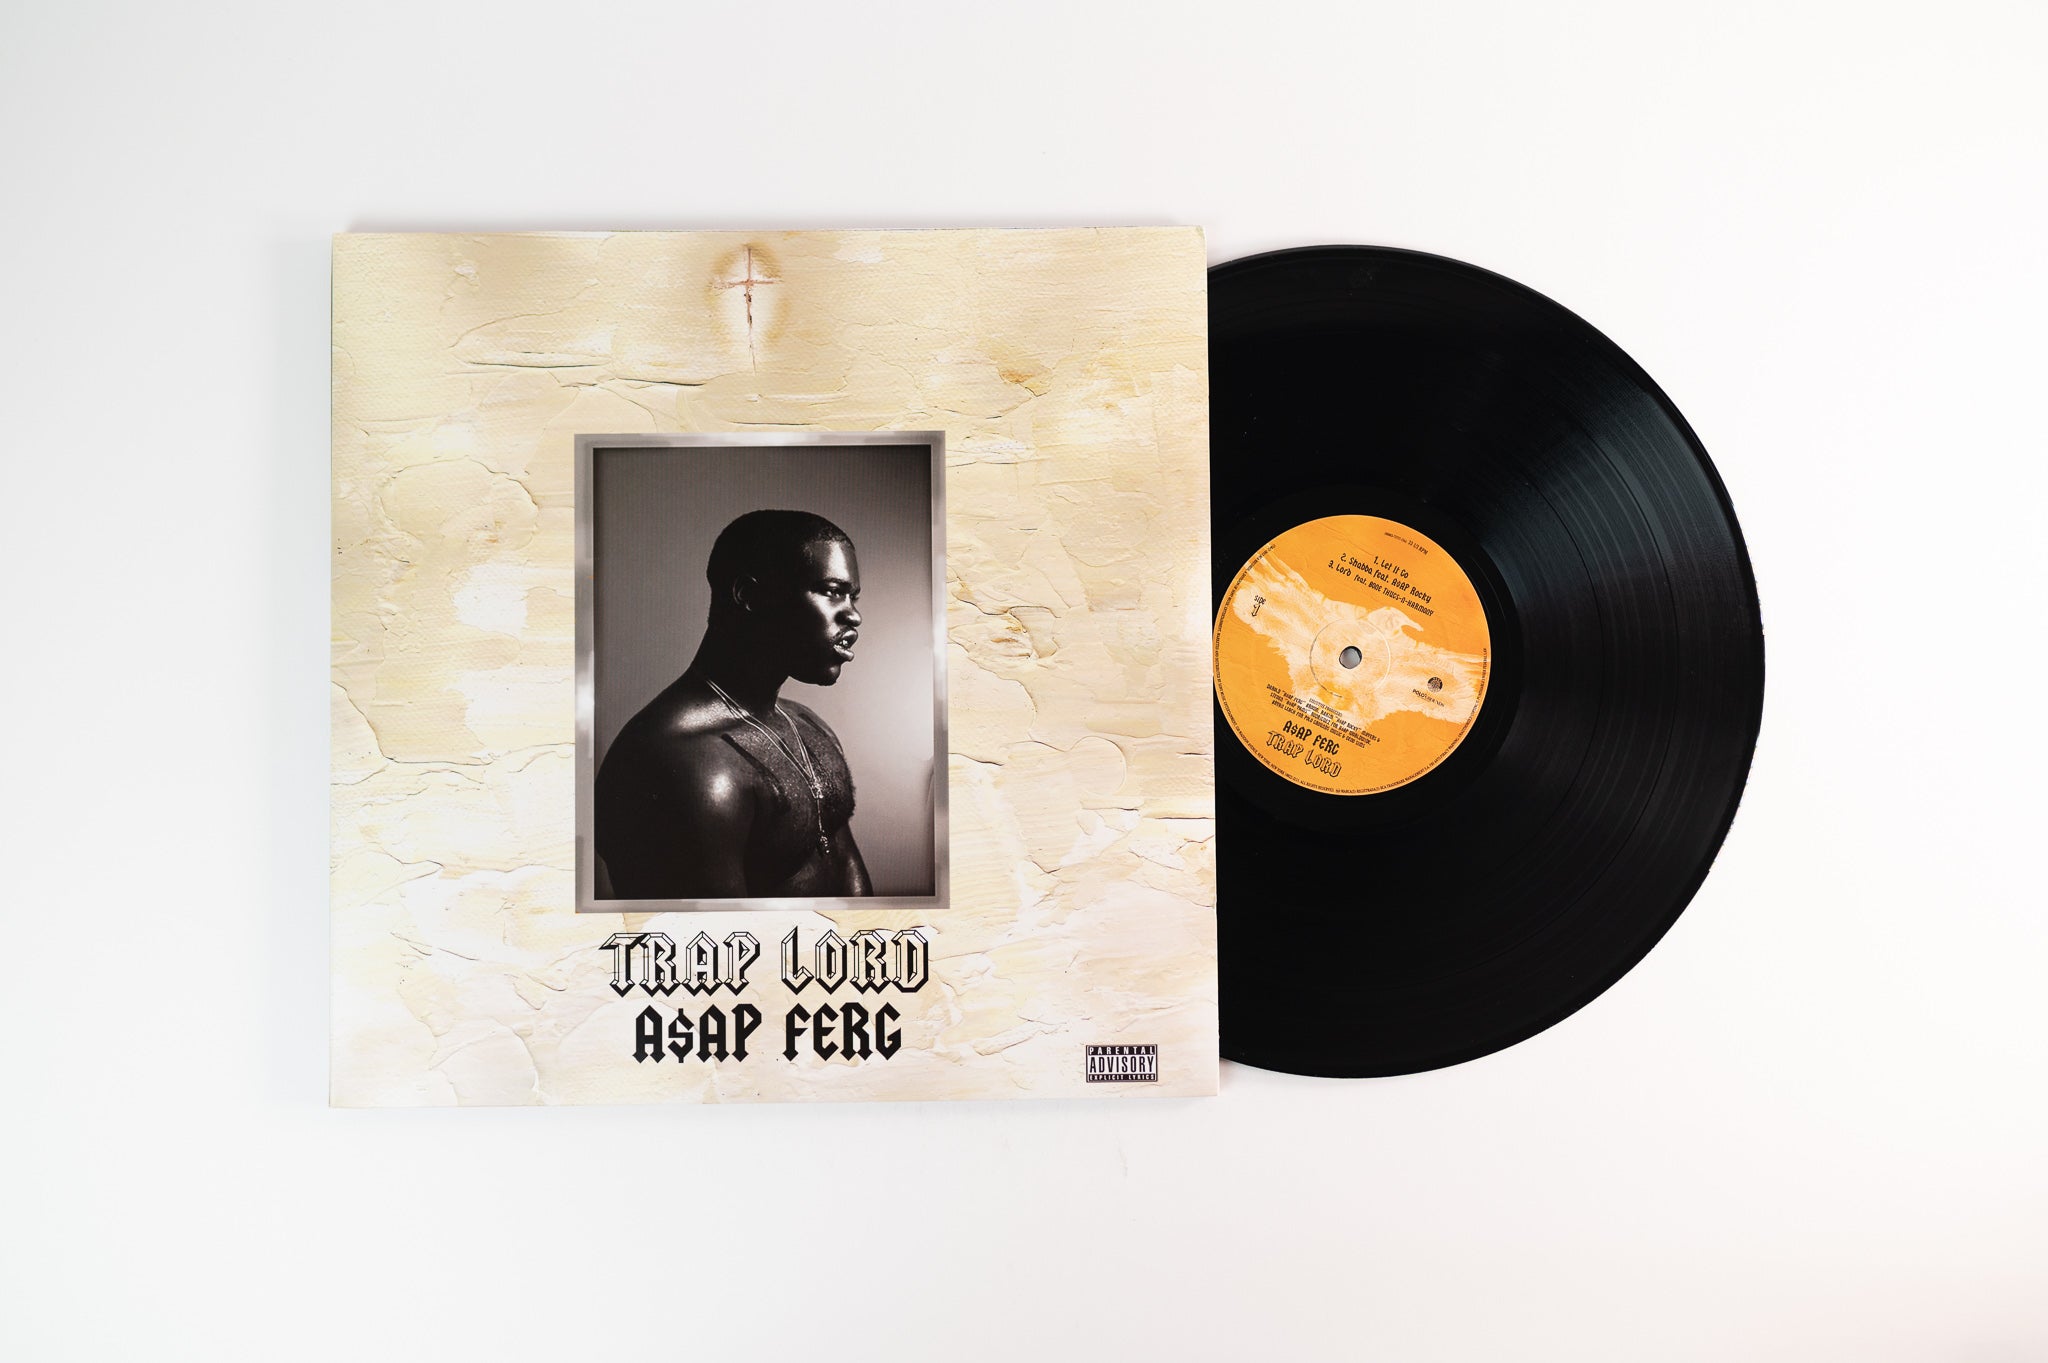 ASAP Ferg - Trap Lord on RCA